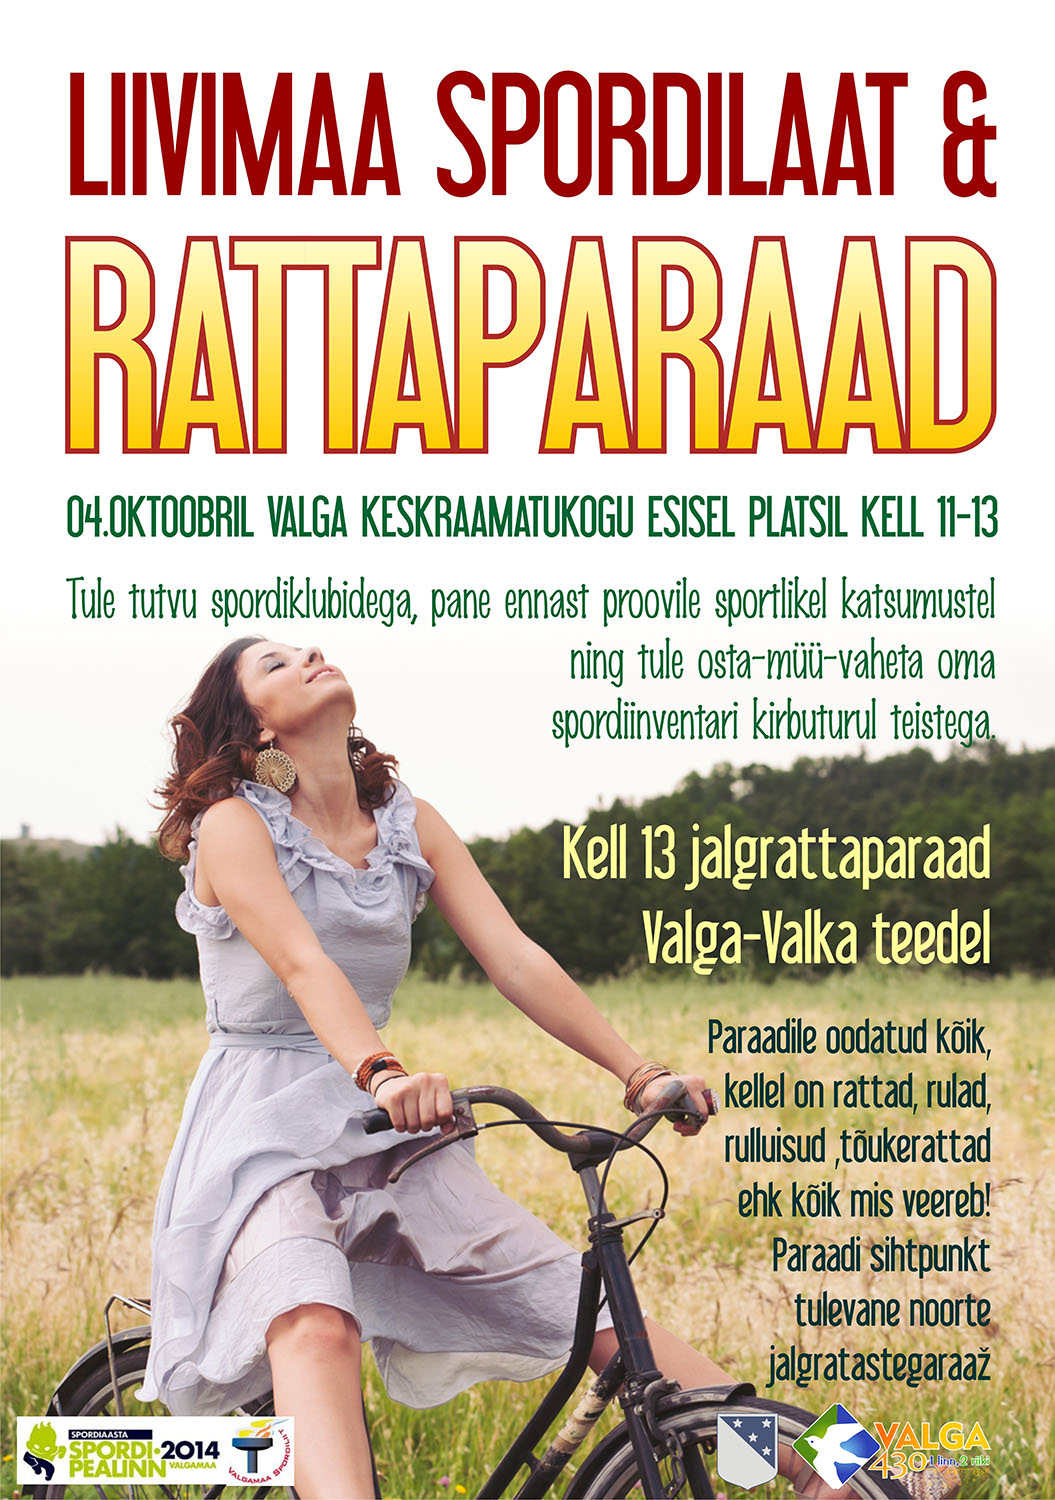 Poster 2014 Liivimaa Spordilaat ja Rattaparaad